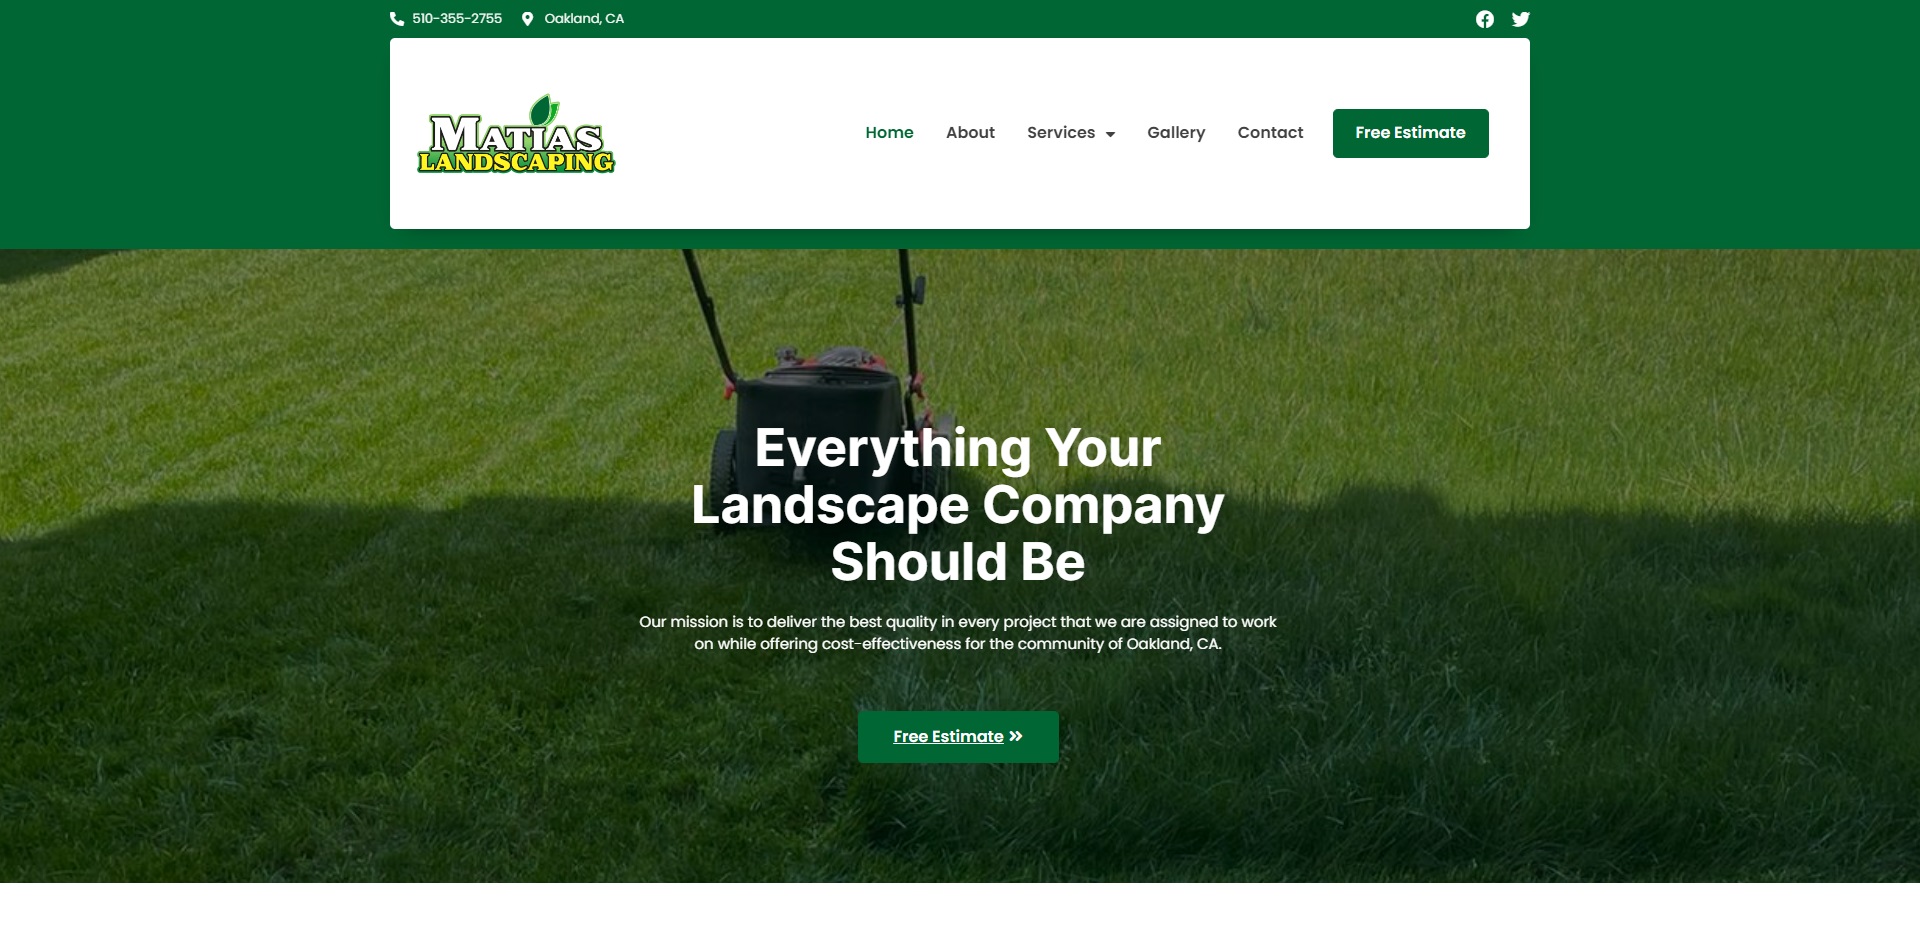 5 Best Landscaping Companies in Oakland, CA